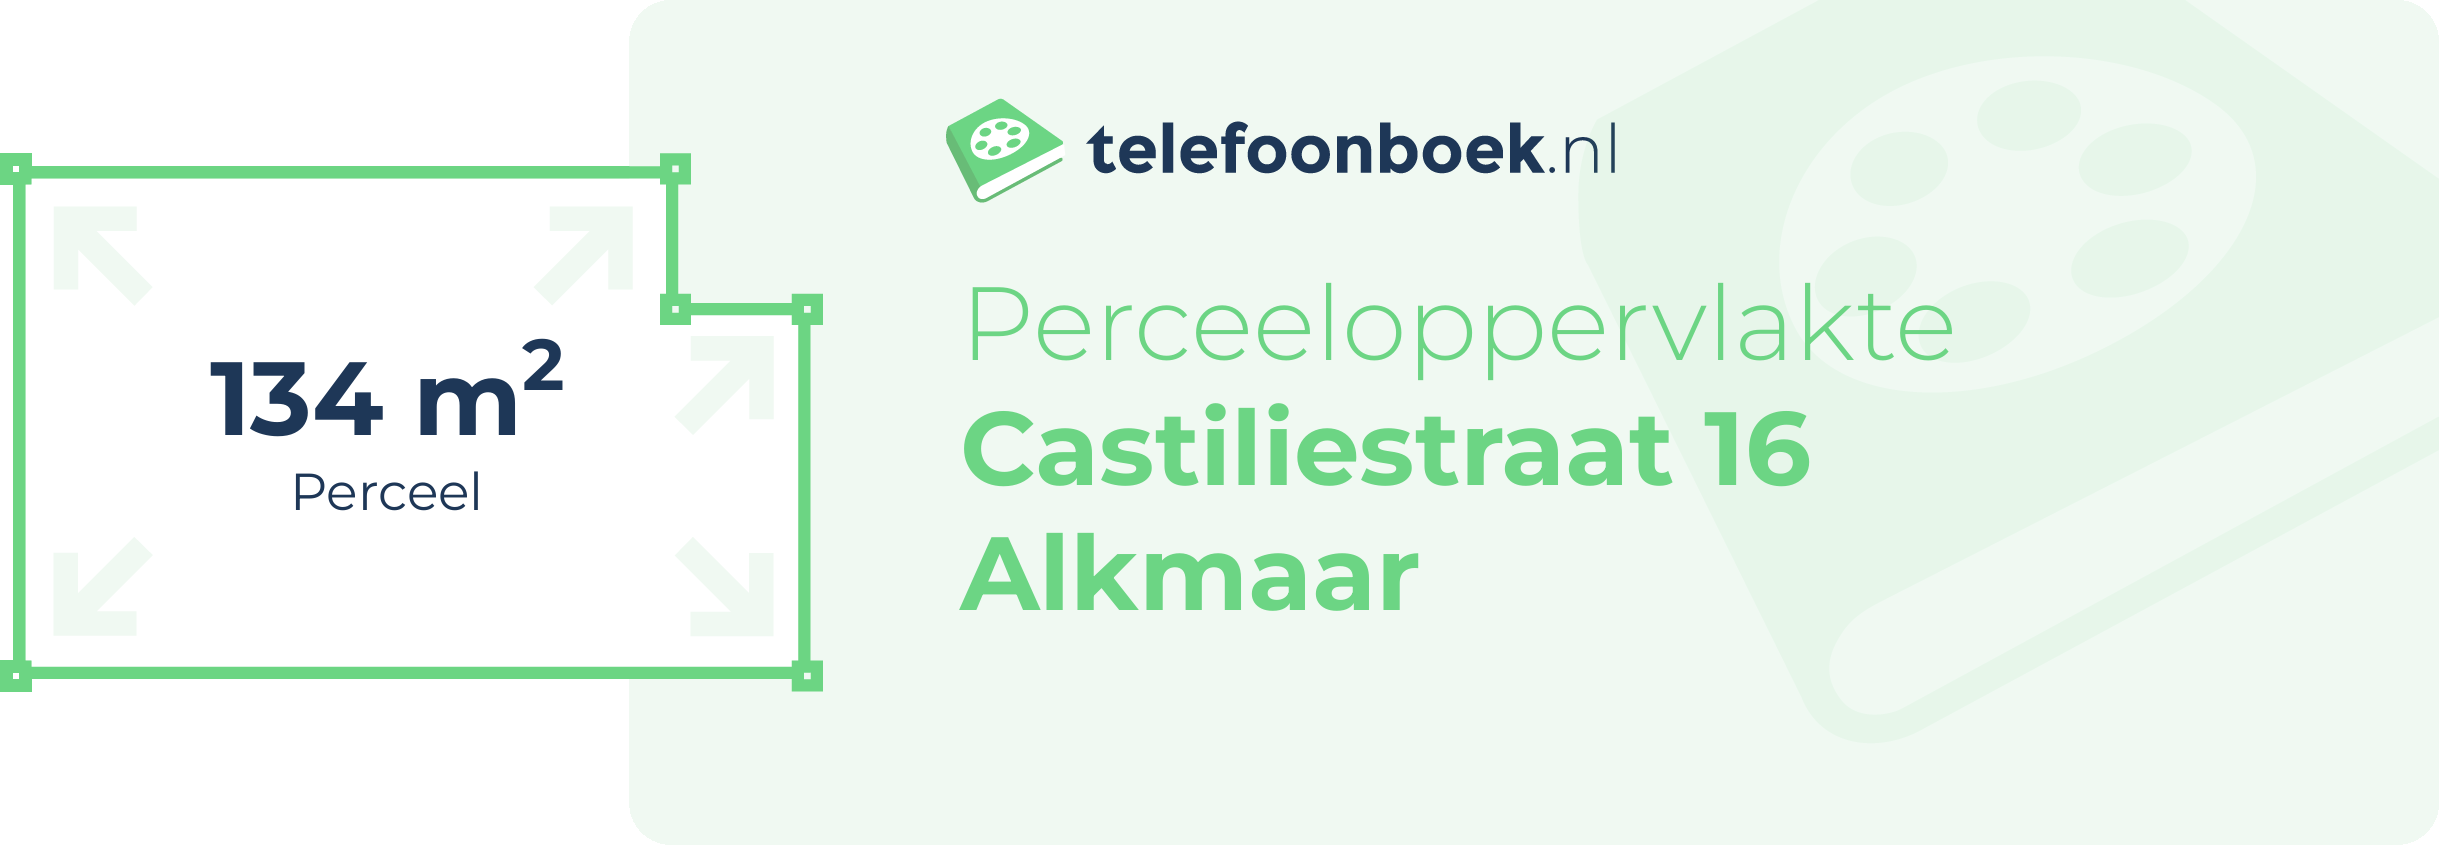 Perceeloppervlakte Castiliestraat 16 Alkmaar